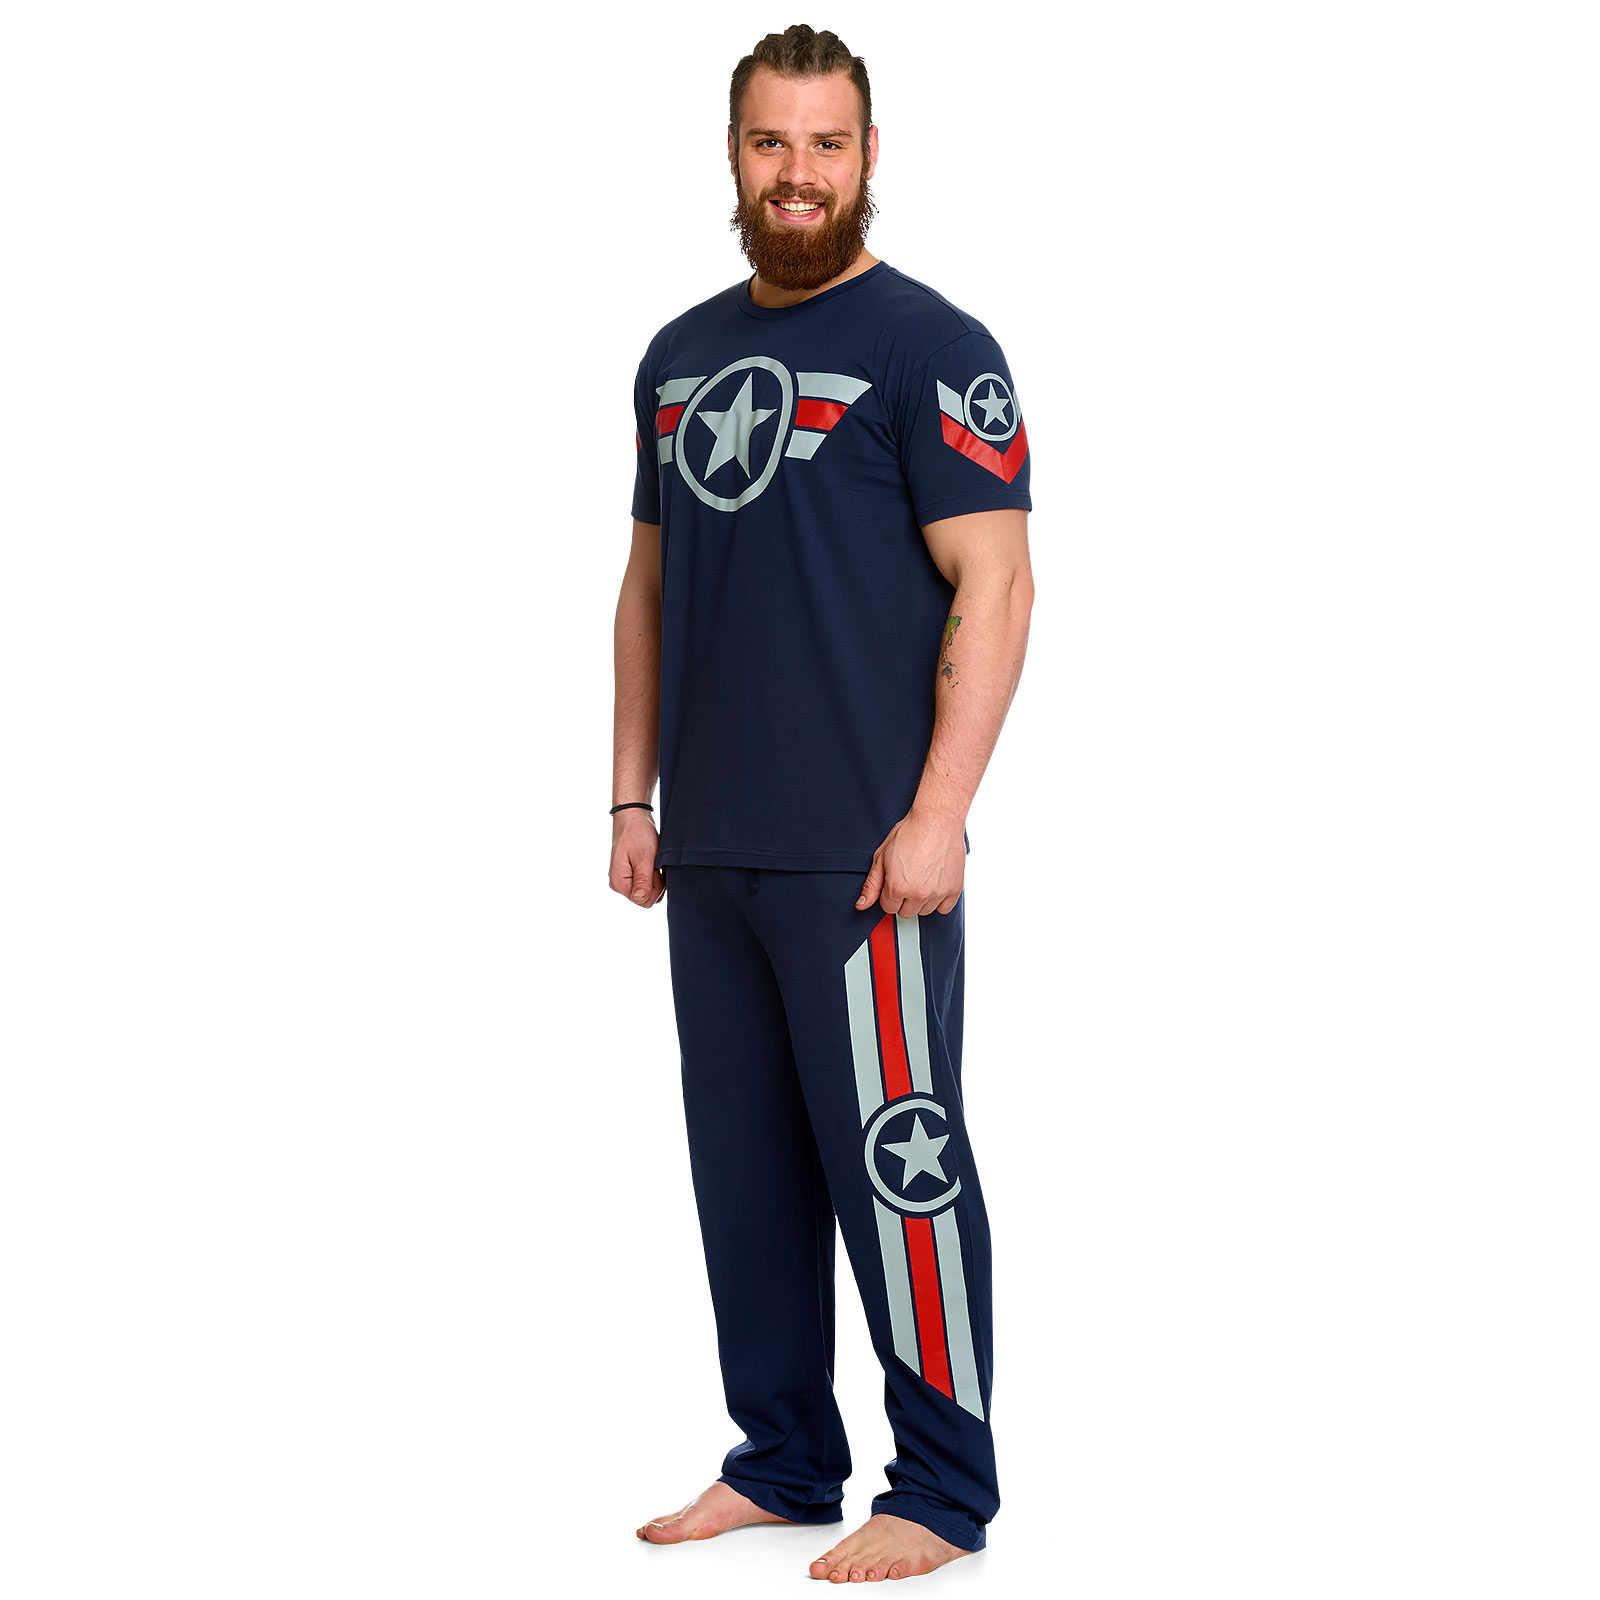 Captain America - Soldier Pyjama Men